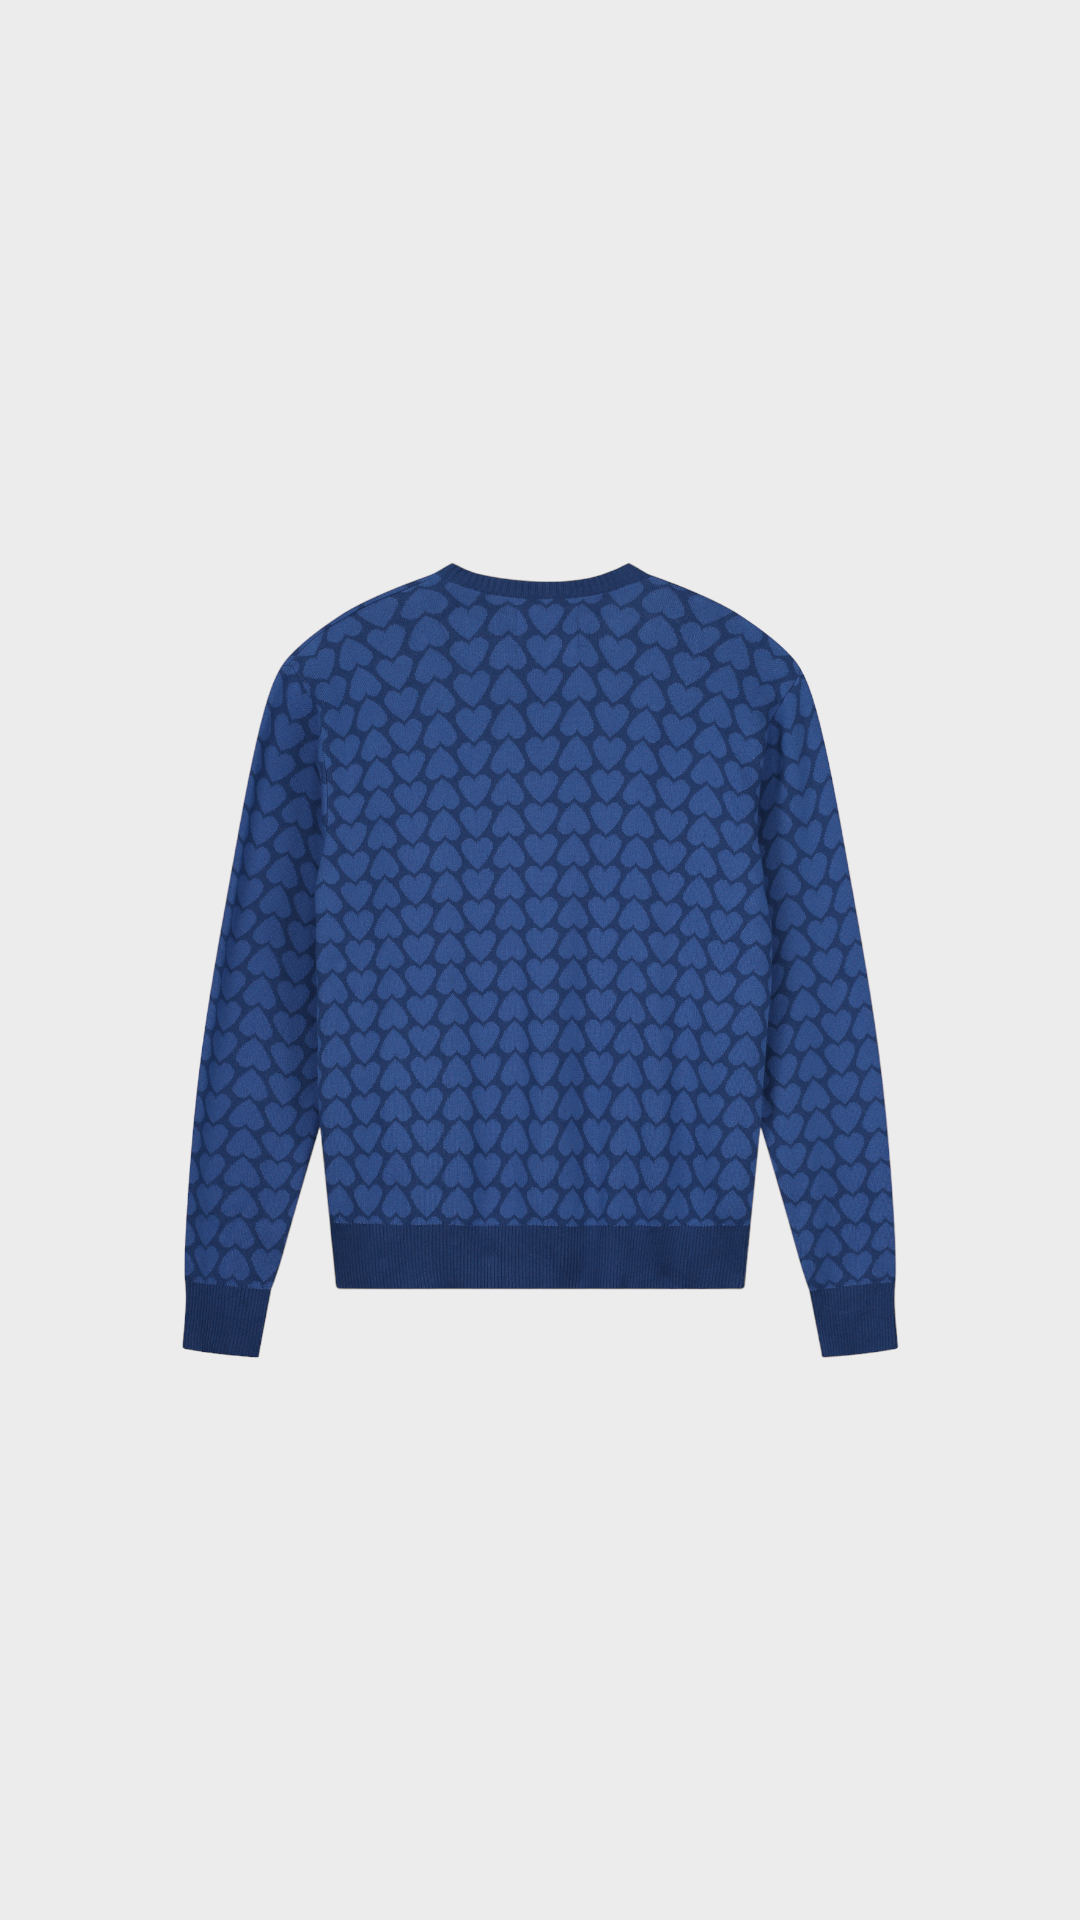 Kobe Heart Sweater